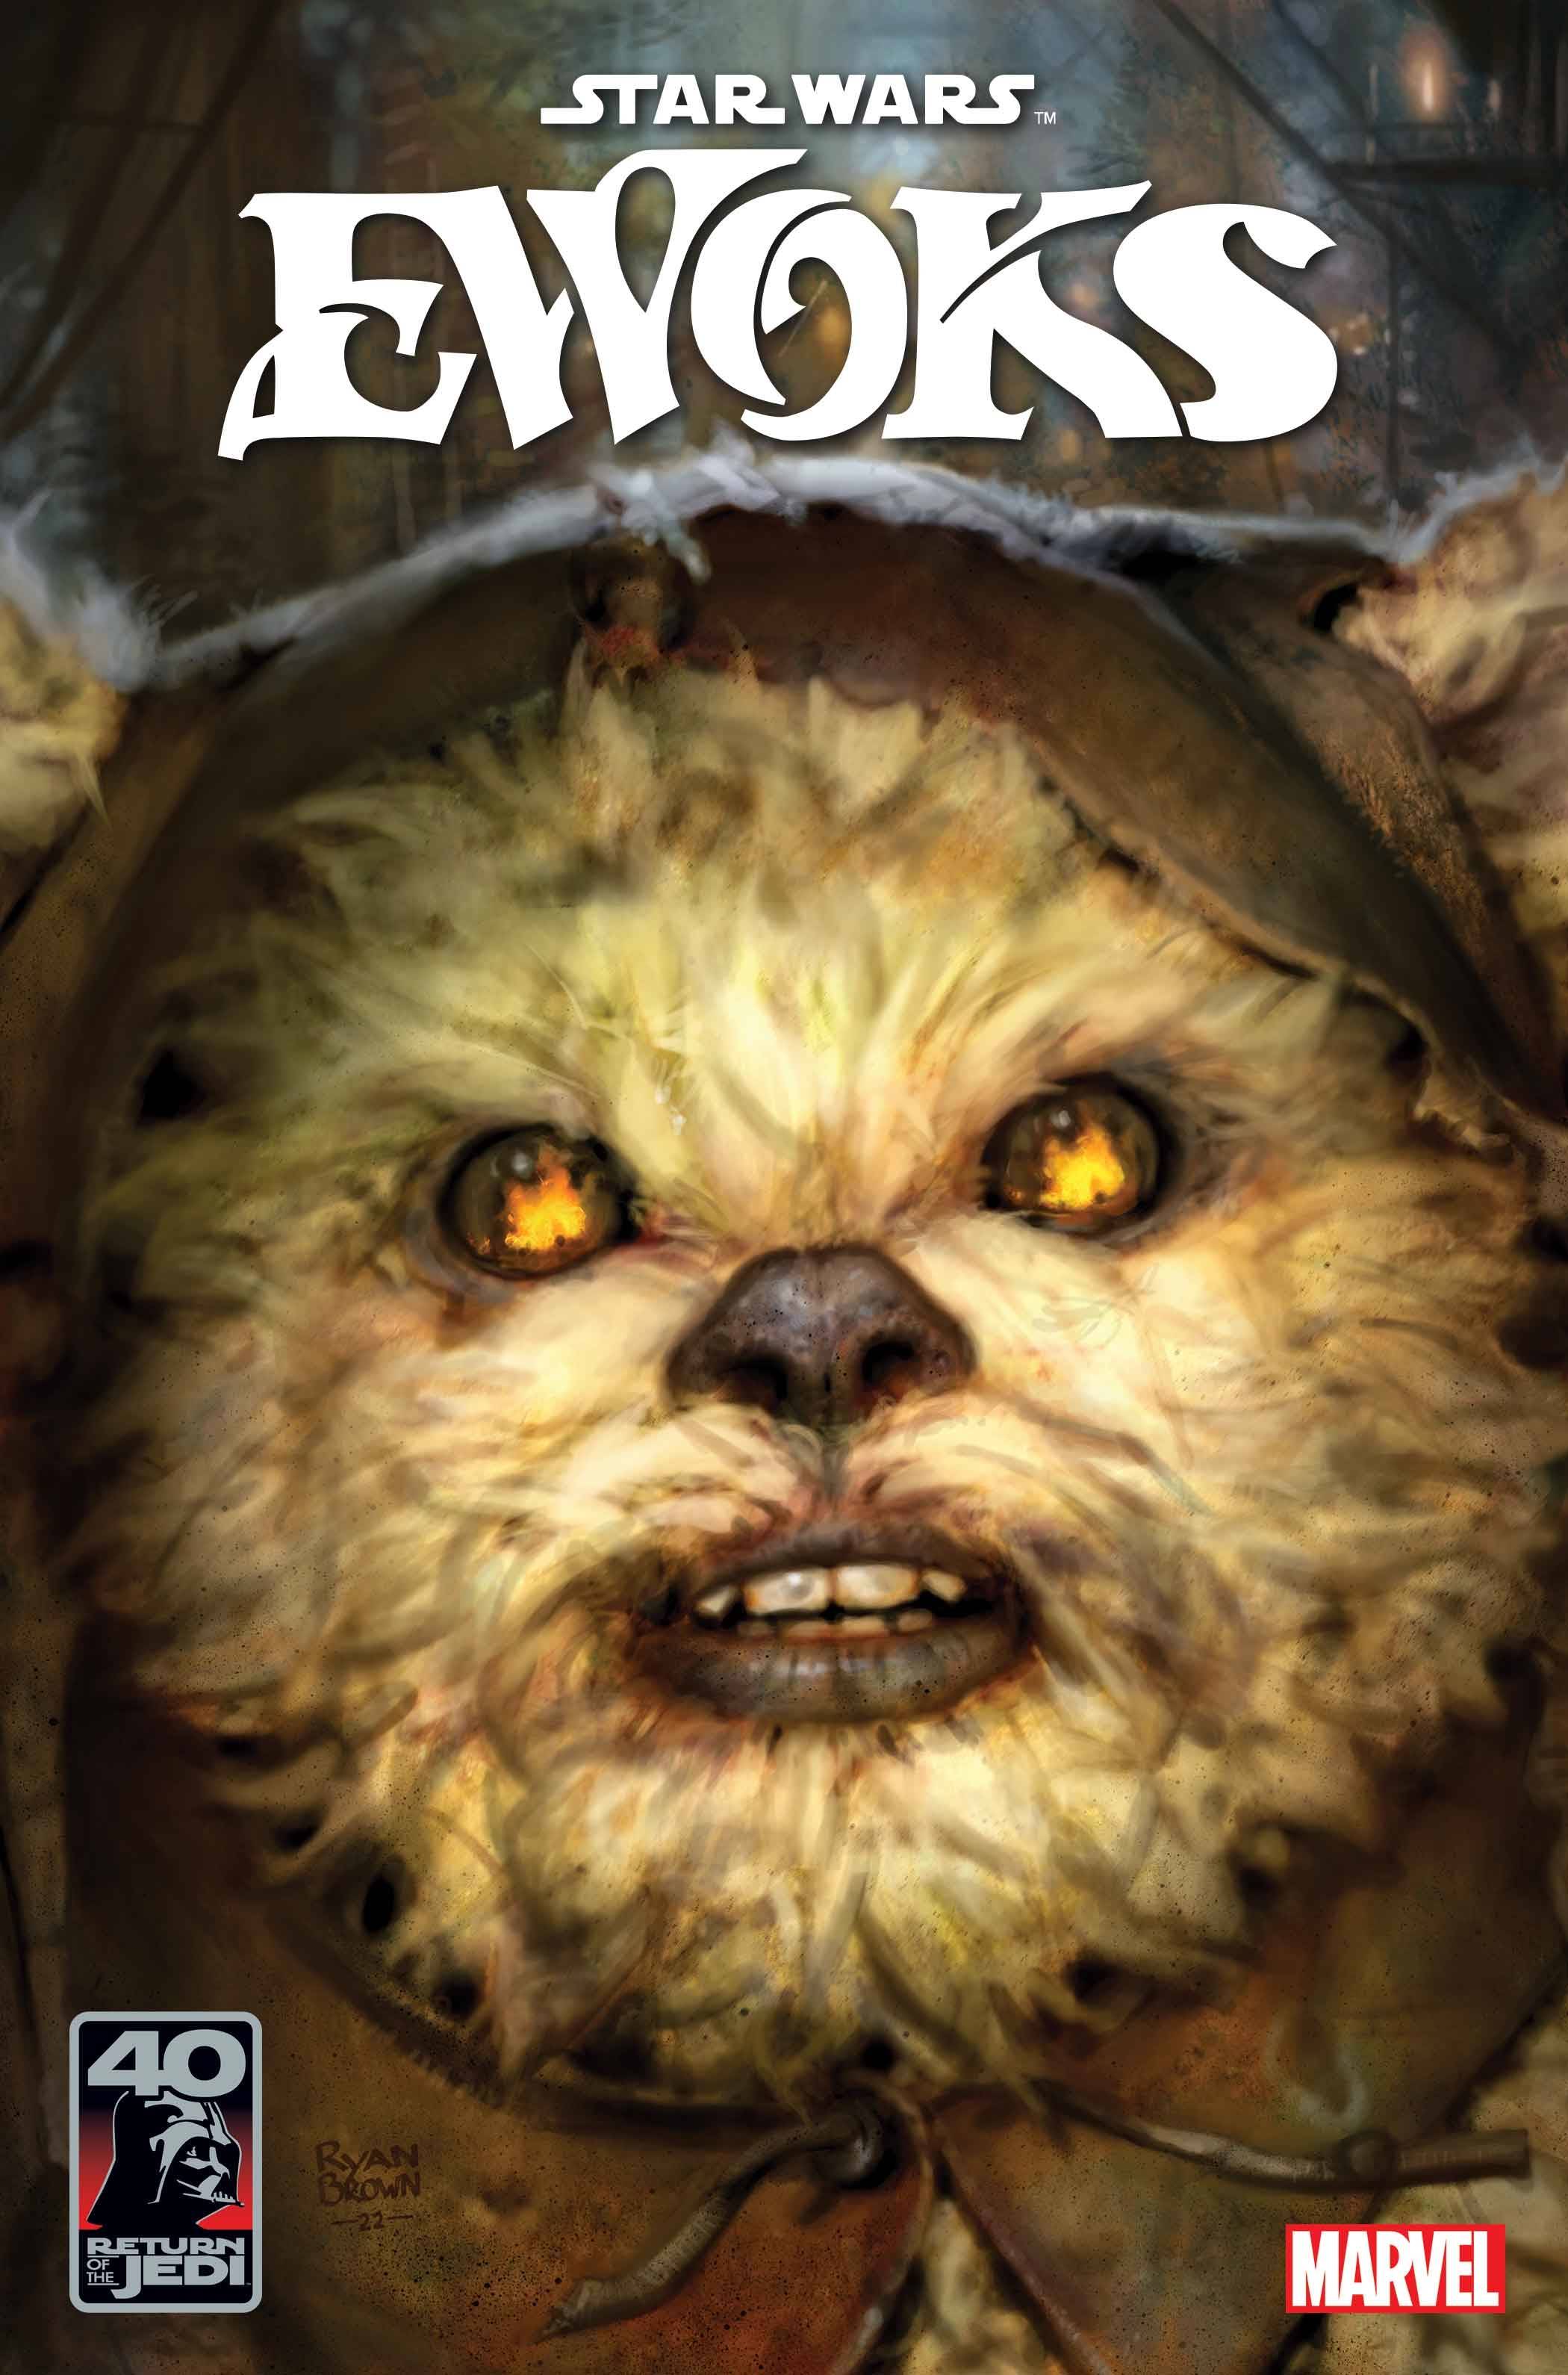 Star Wars Return Of The Jedi Ewoks #1 (One Shot) Cover A